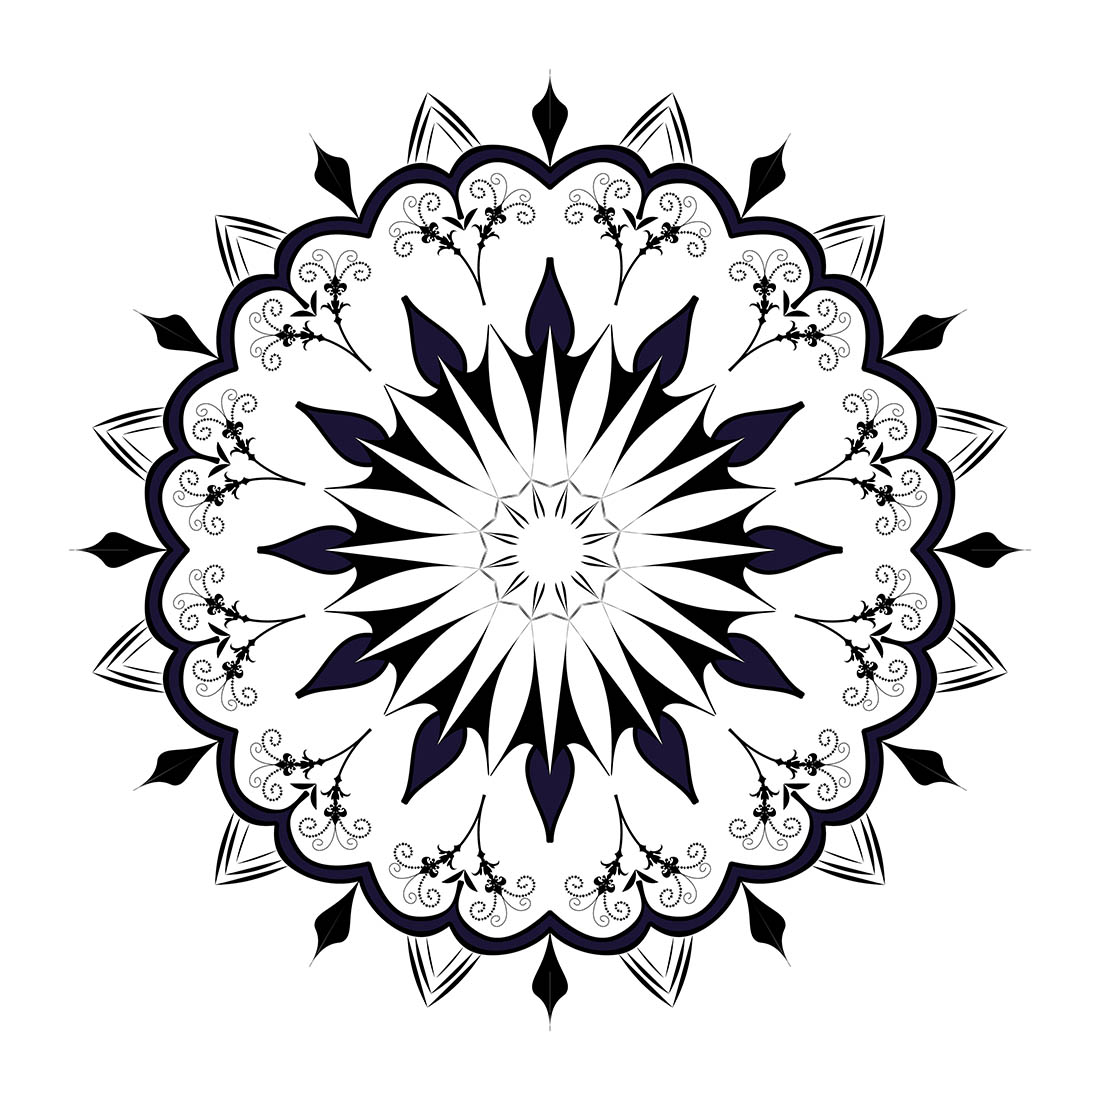 Drawing flower designs mandala art, black and white mandala, creative mandala art, pencil sketch drawing beautiful creative mandala art cover image.